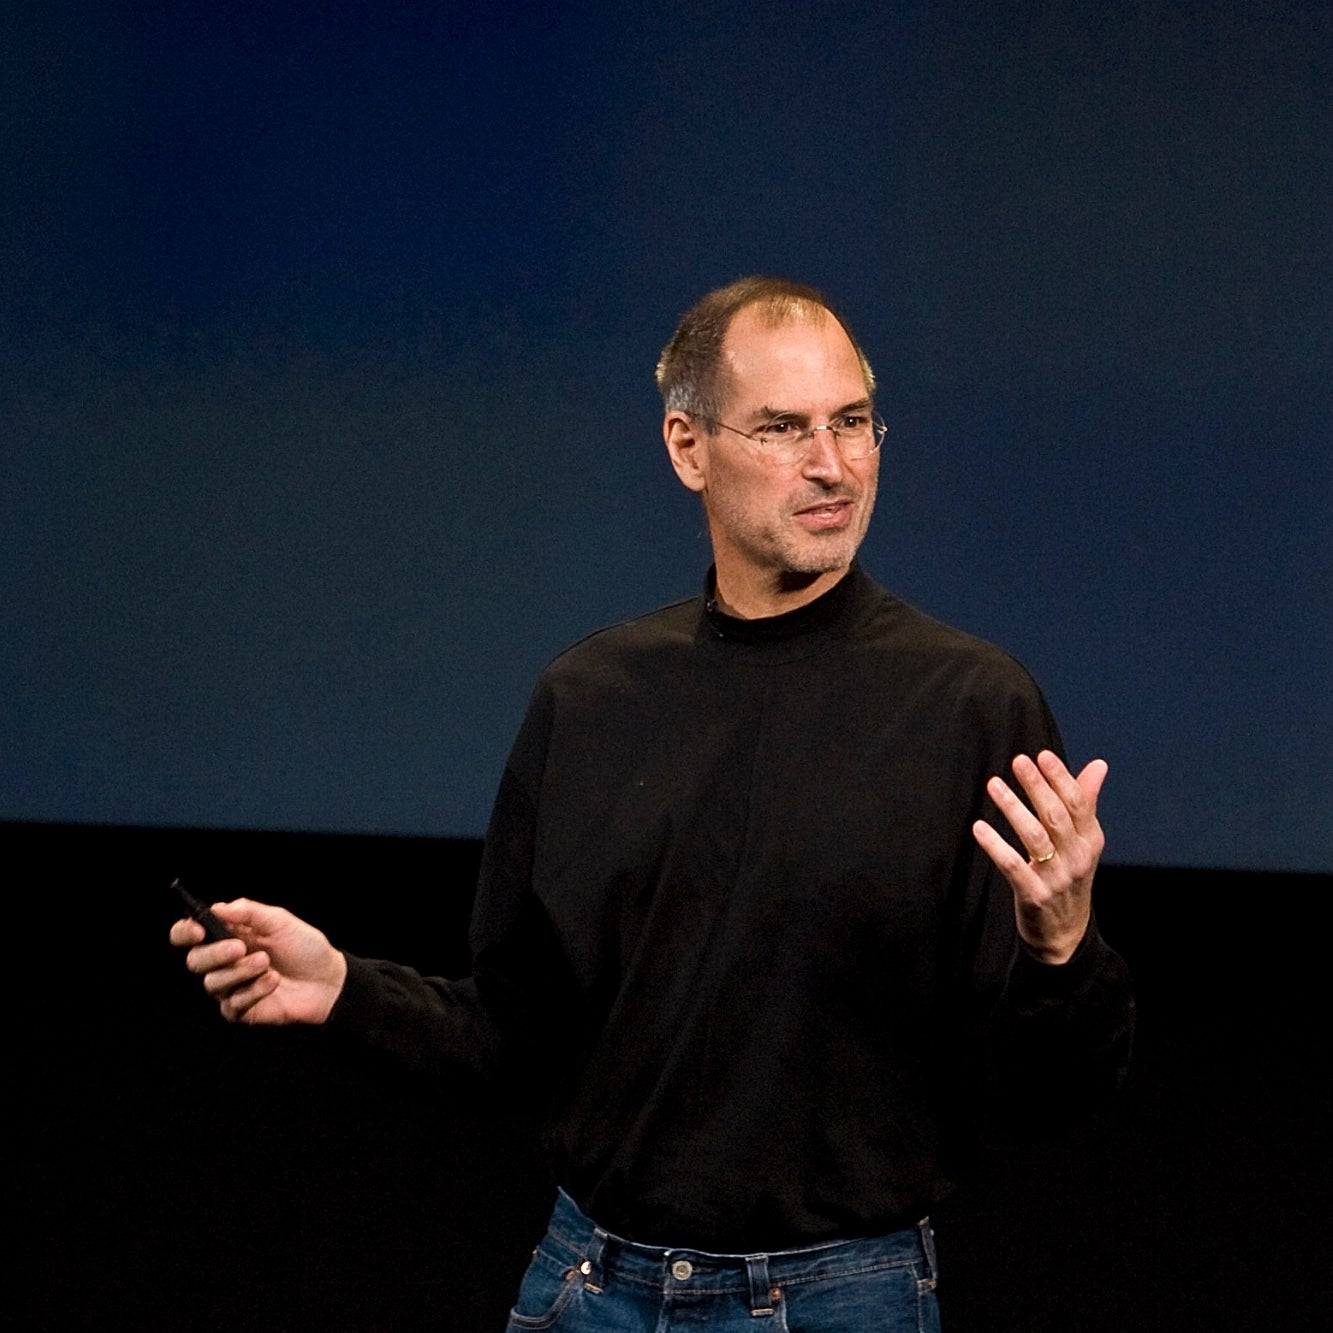 Steve Jobs Passed Away In October 2011